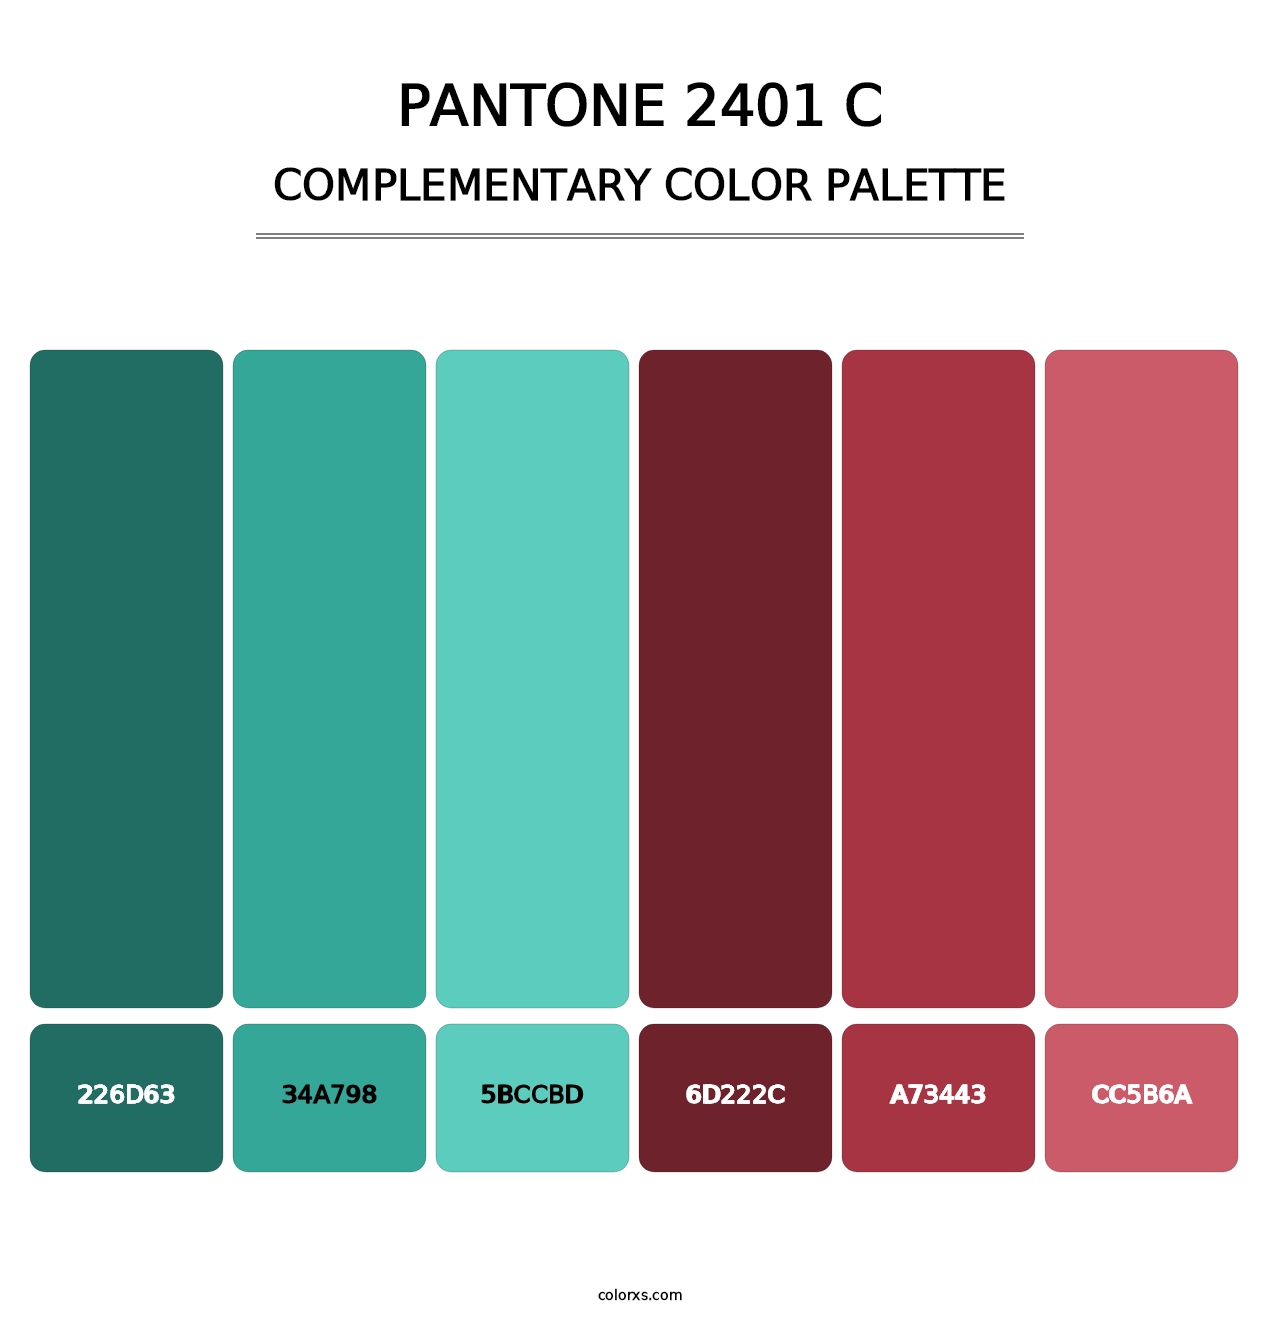 PANTONE 2401 C - Complementary Color Palette